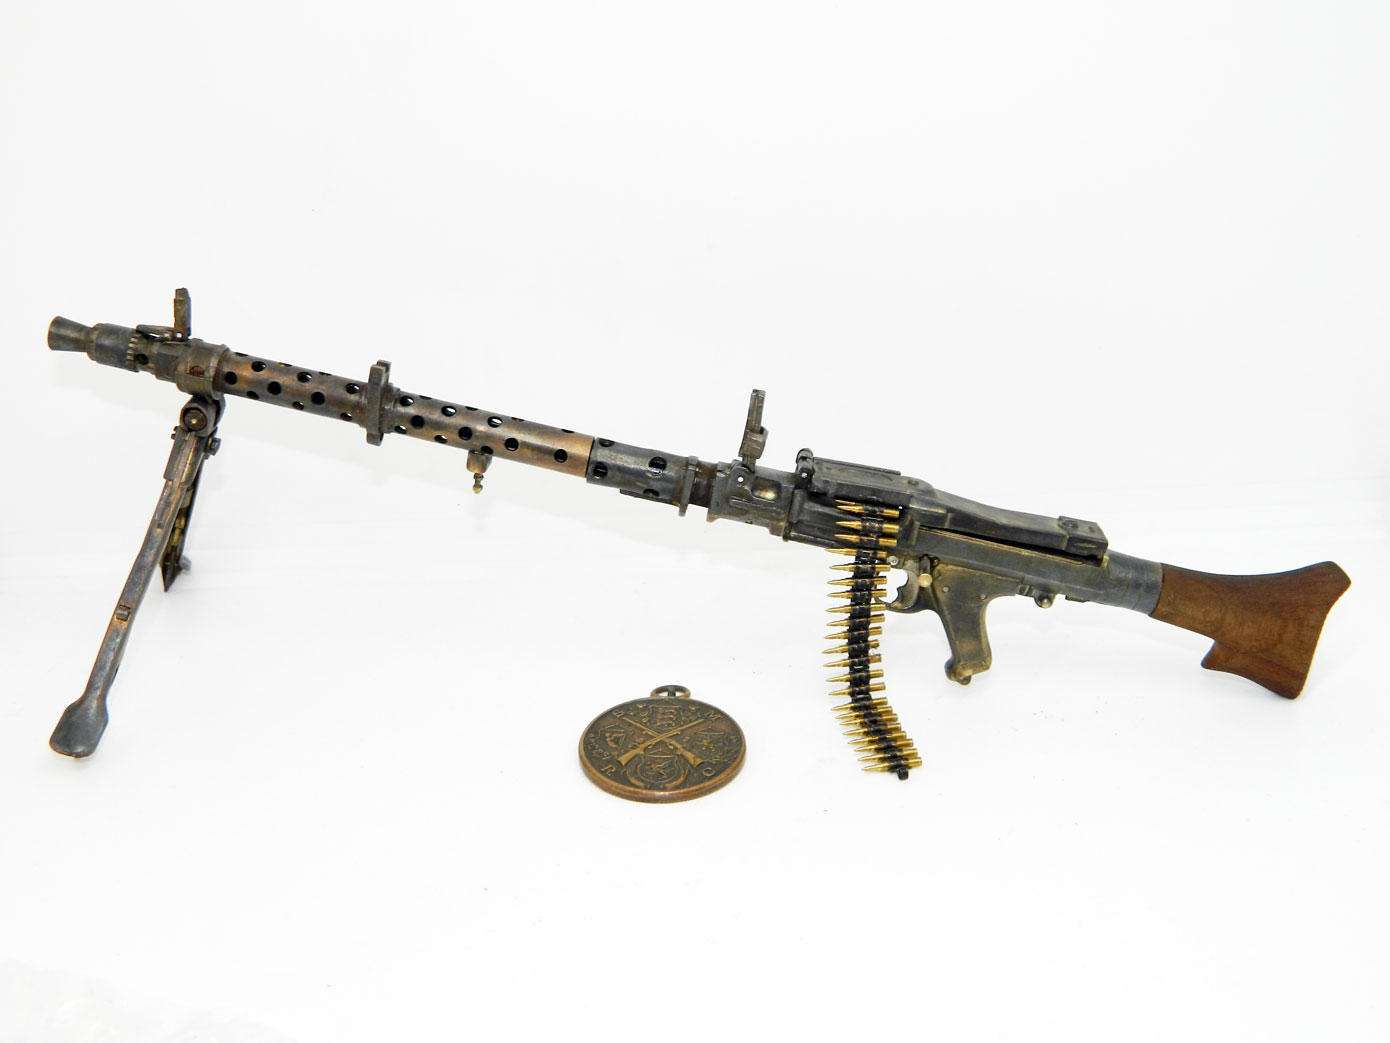 MG34 machine gun on a scale of 1:4